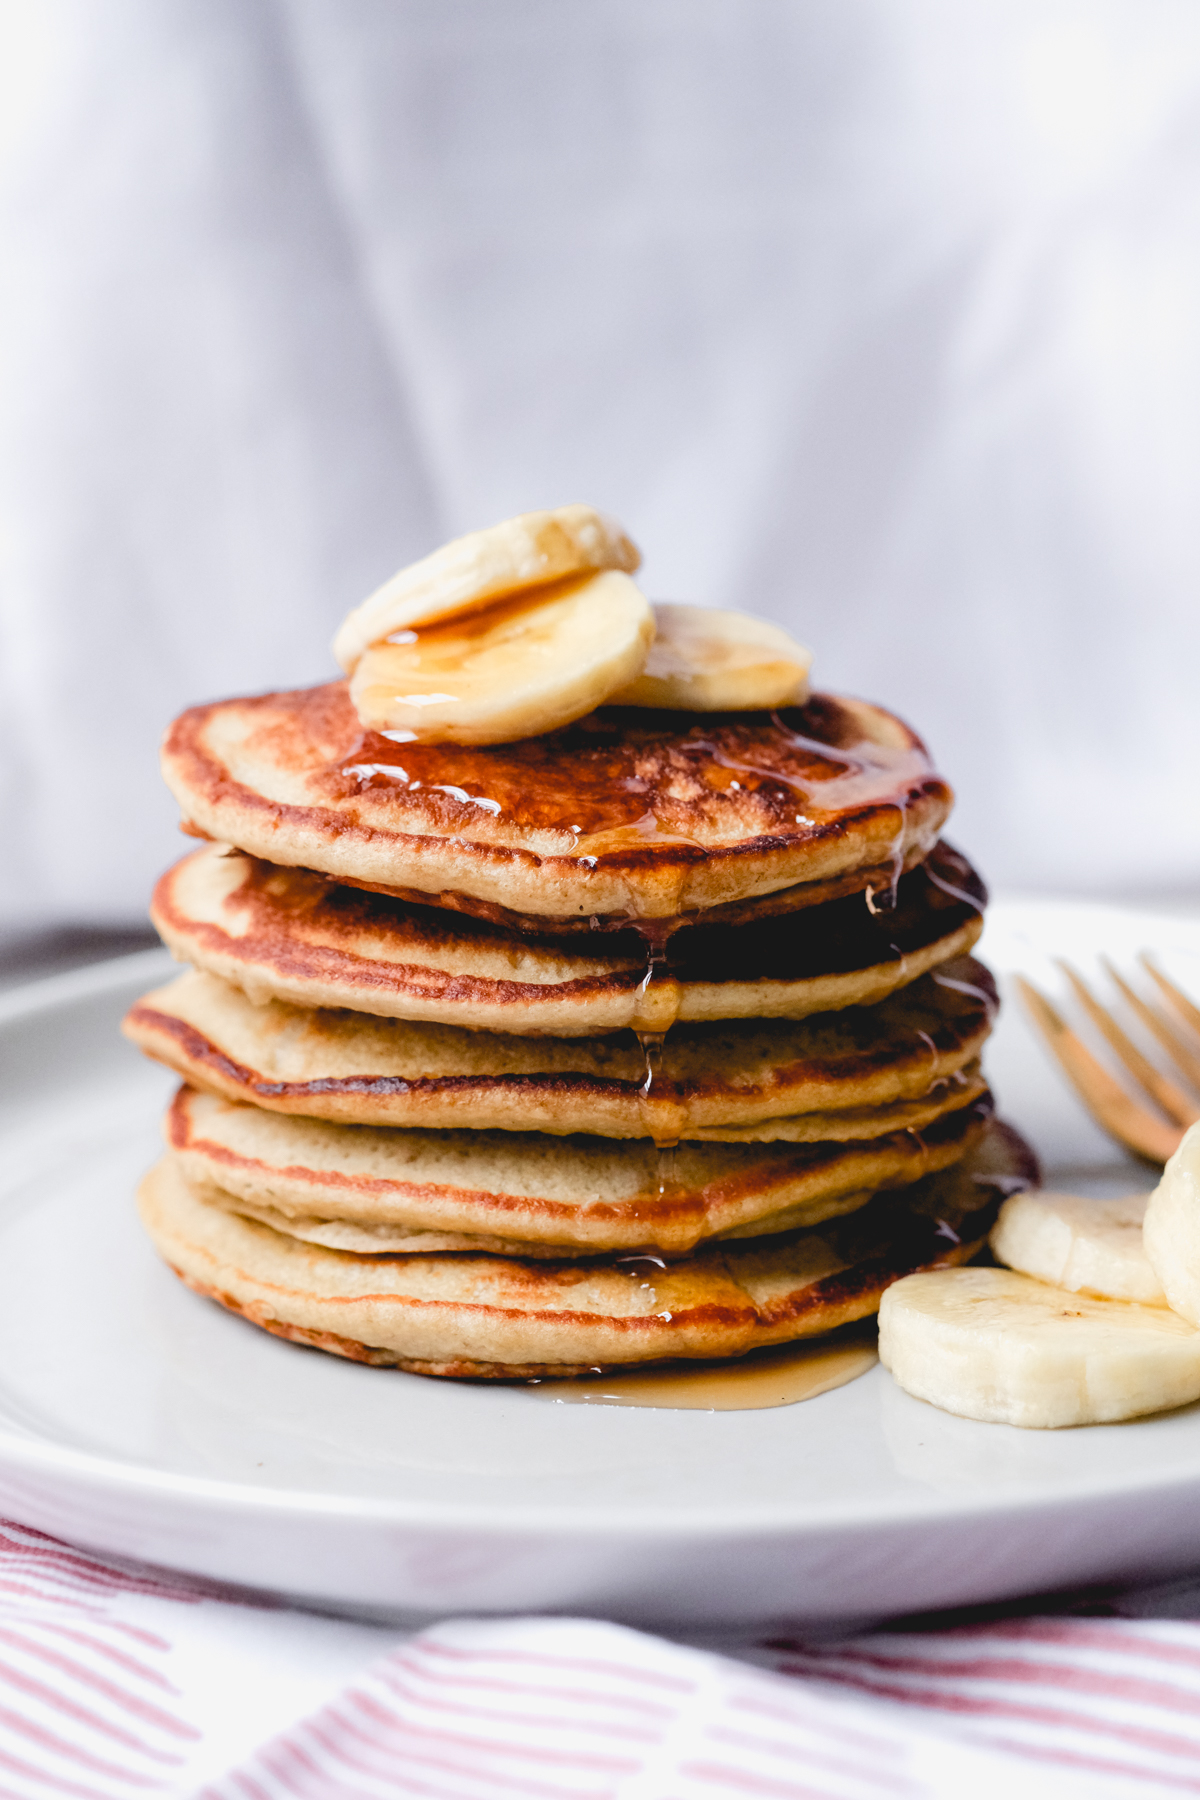 single stack of banana oatmeal pancakes with banana slices and syrup